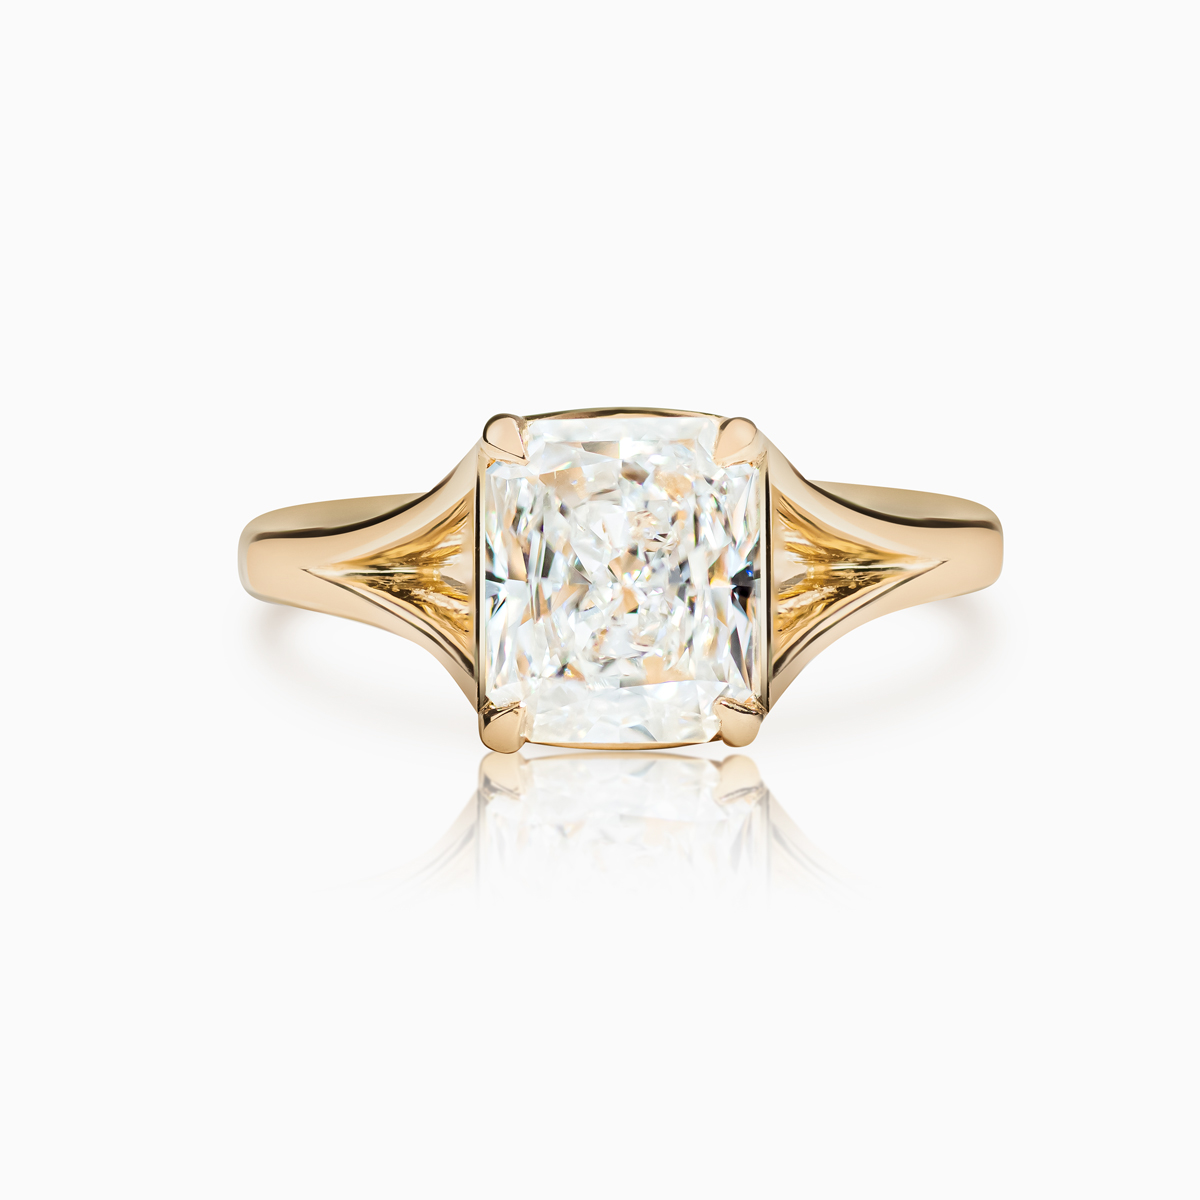 Split Shank Engagement Ring with  1.90 Carat Radiant Cut Diamond